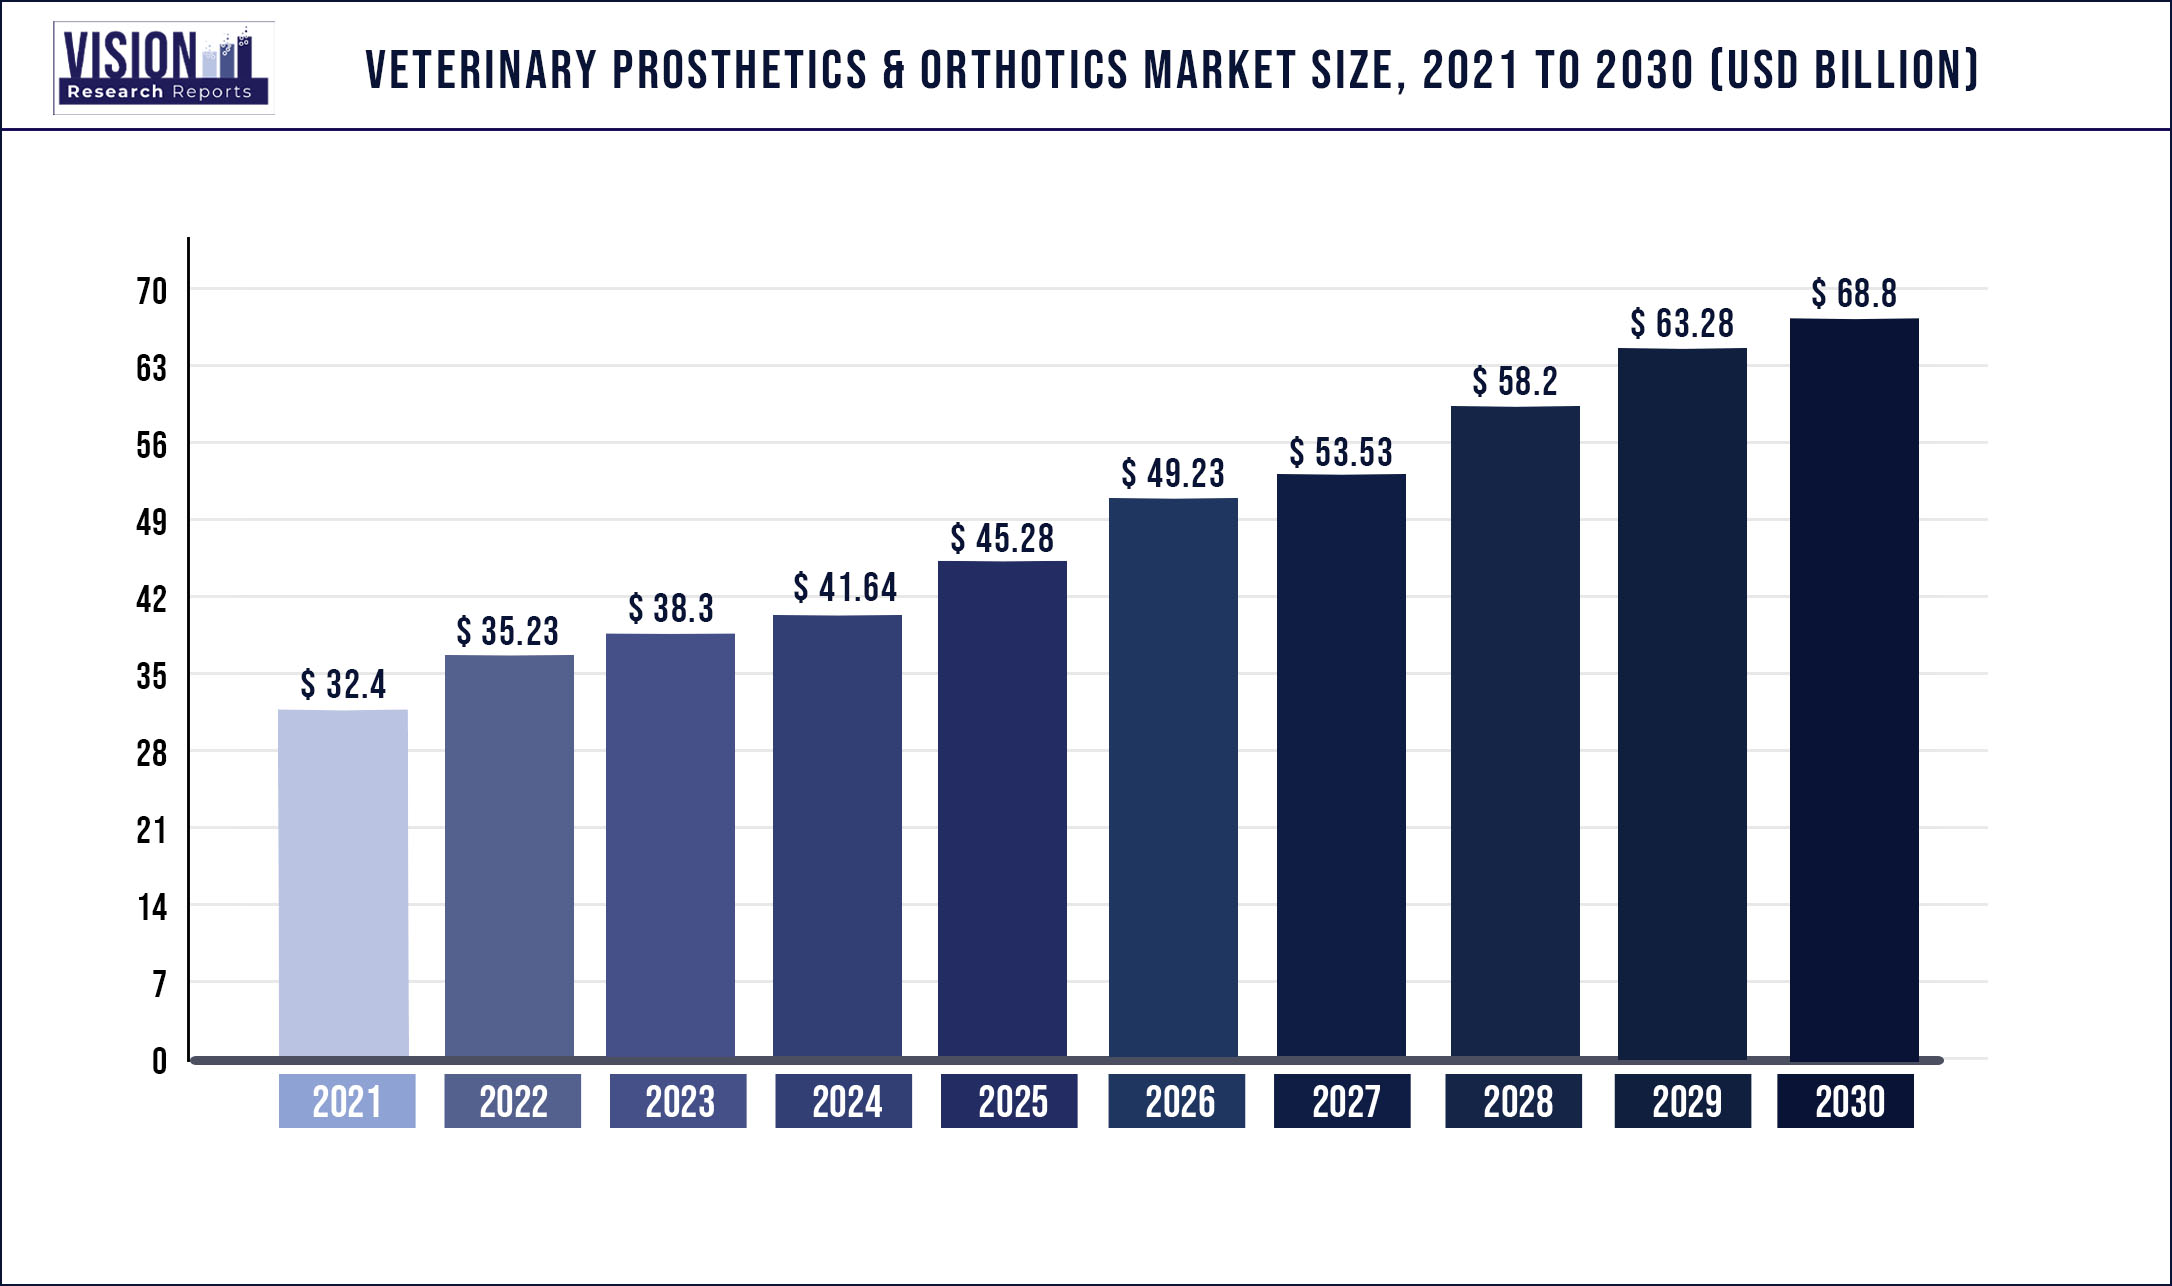 Veterinary Prosthetics & Orthotics Market Size 2021 to 2030